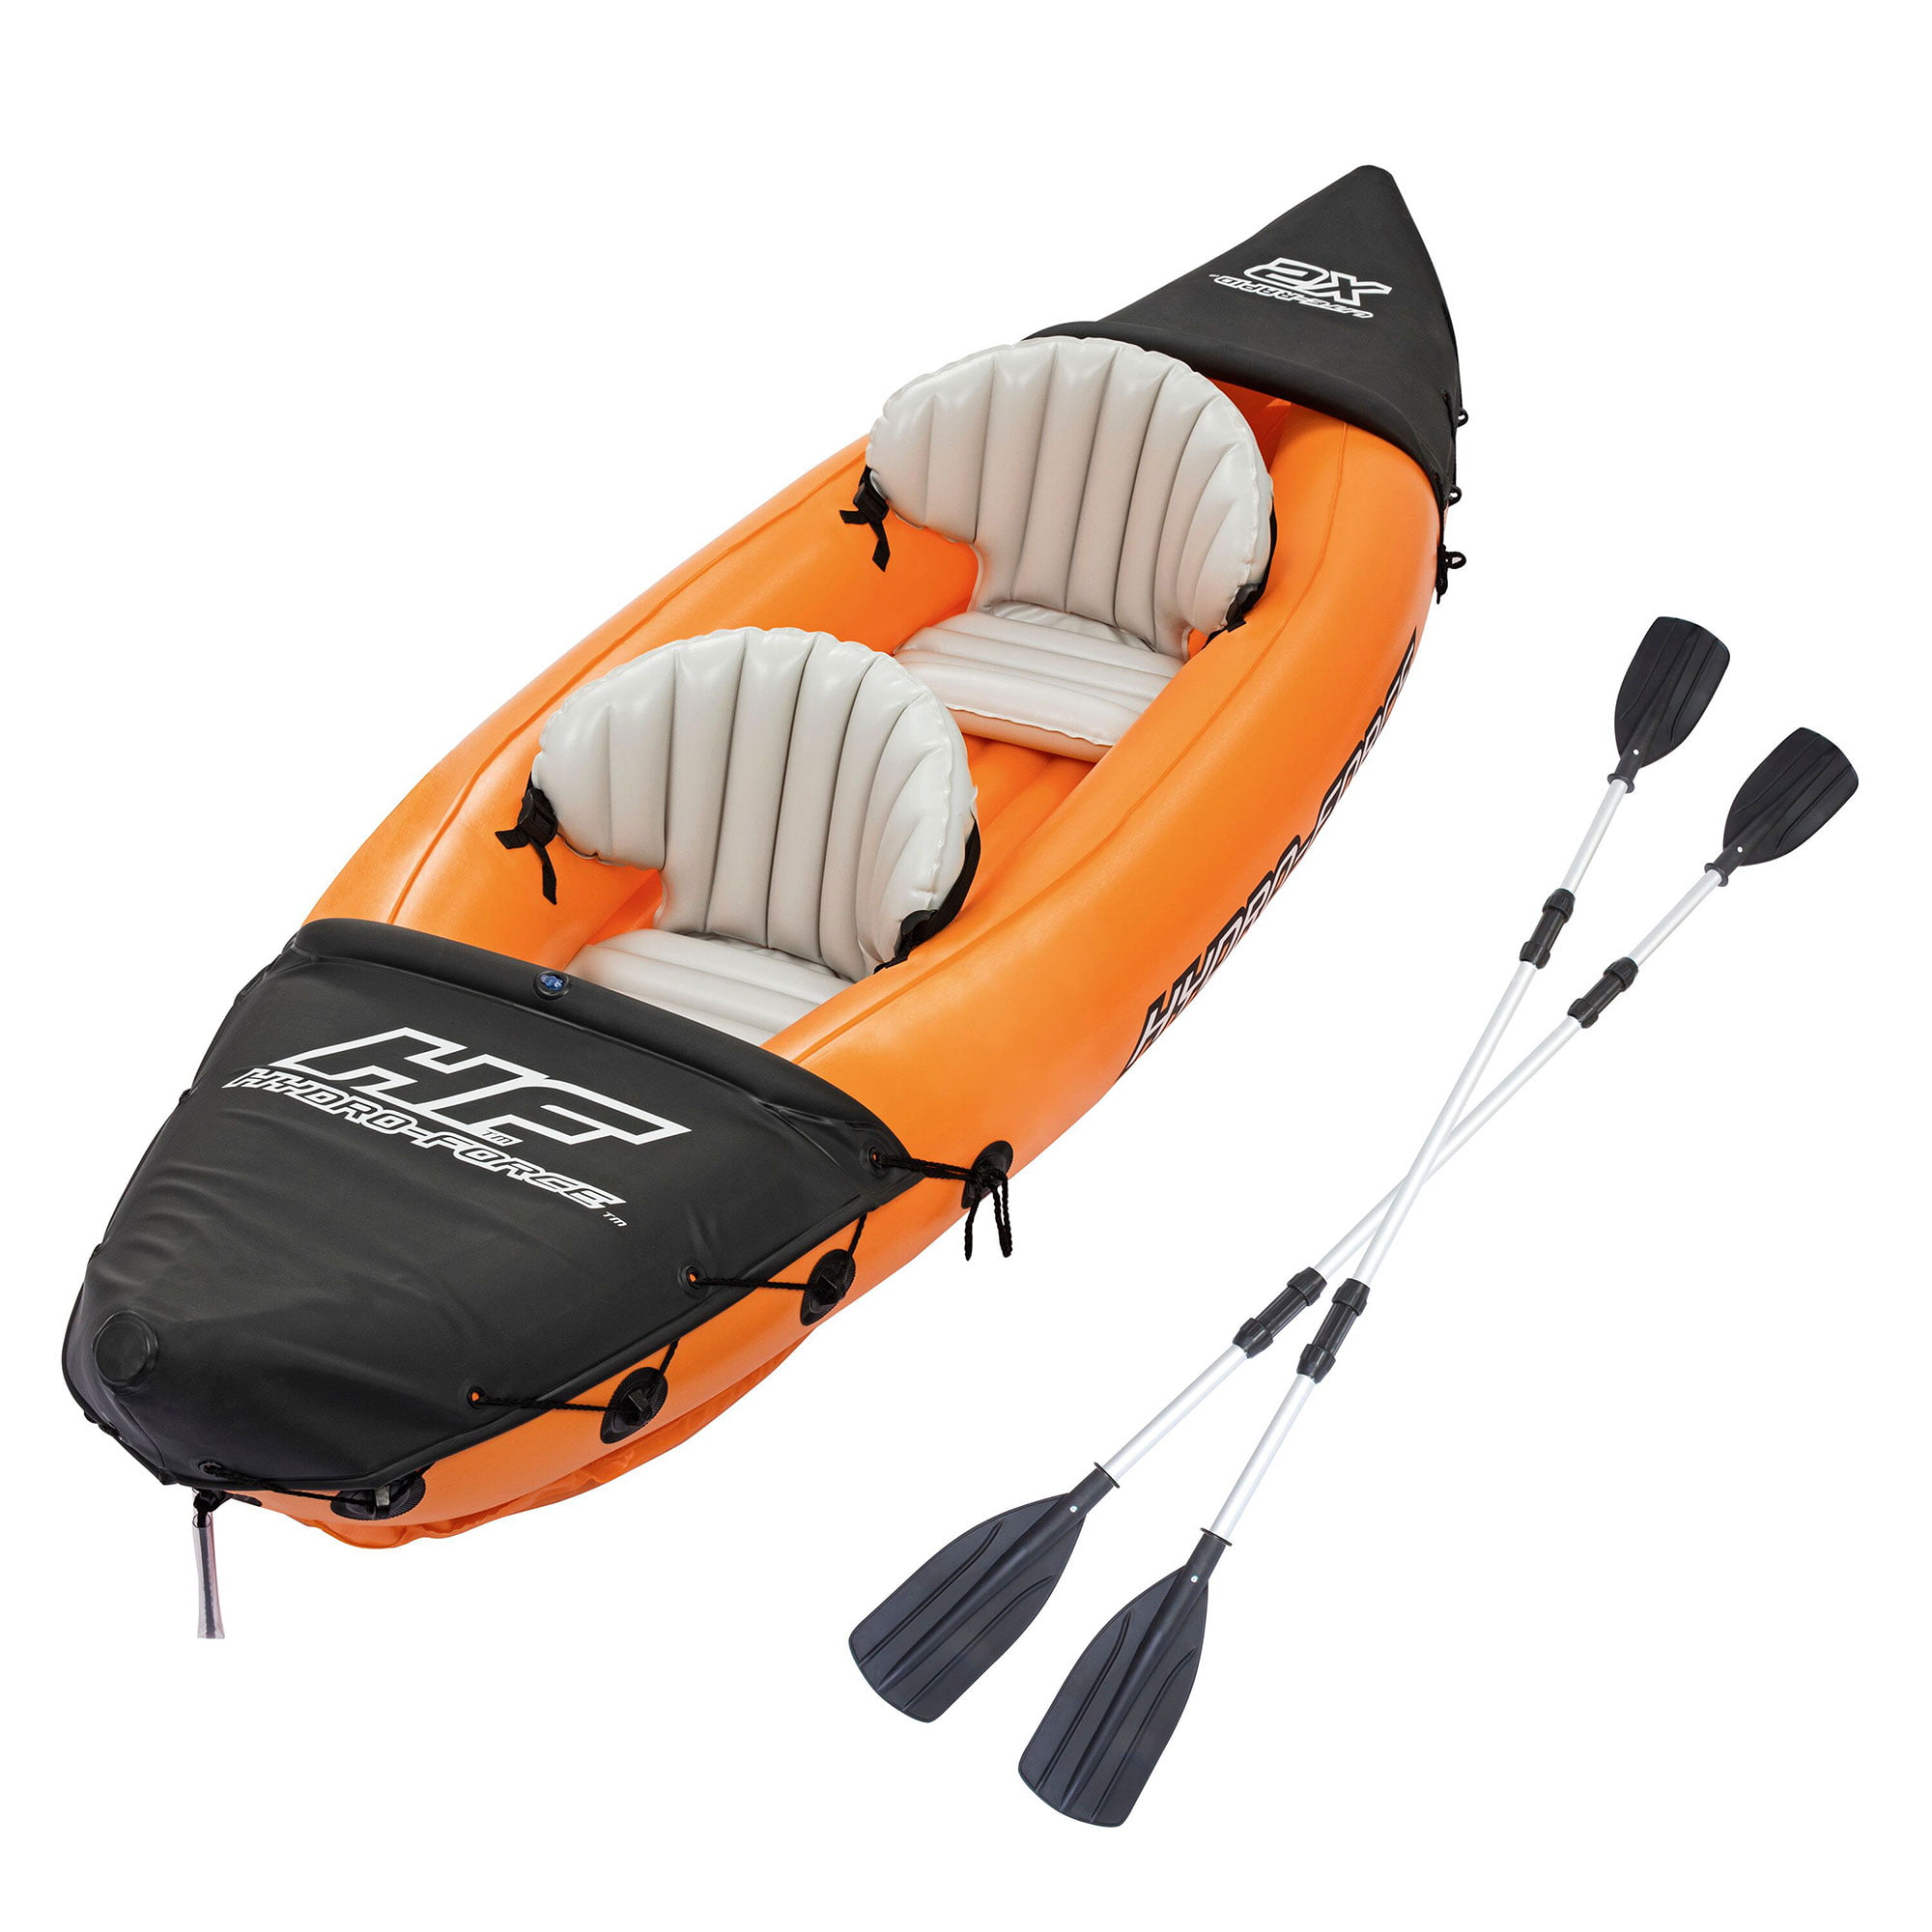 260x110mm Kayak Skeg Tracking Fin Integral Watershed Board Canoe Boat Accessory 